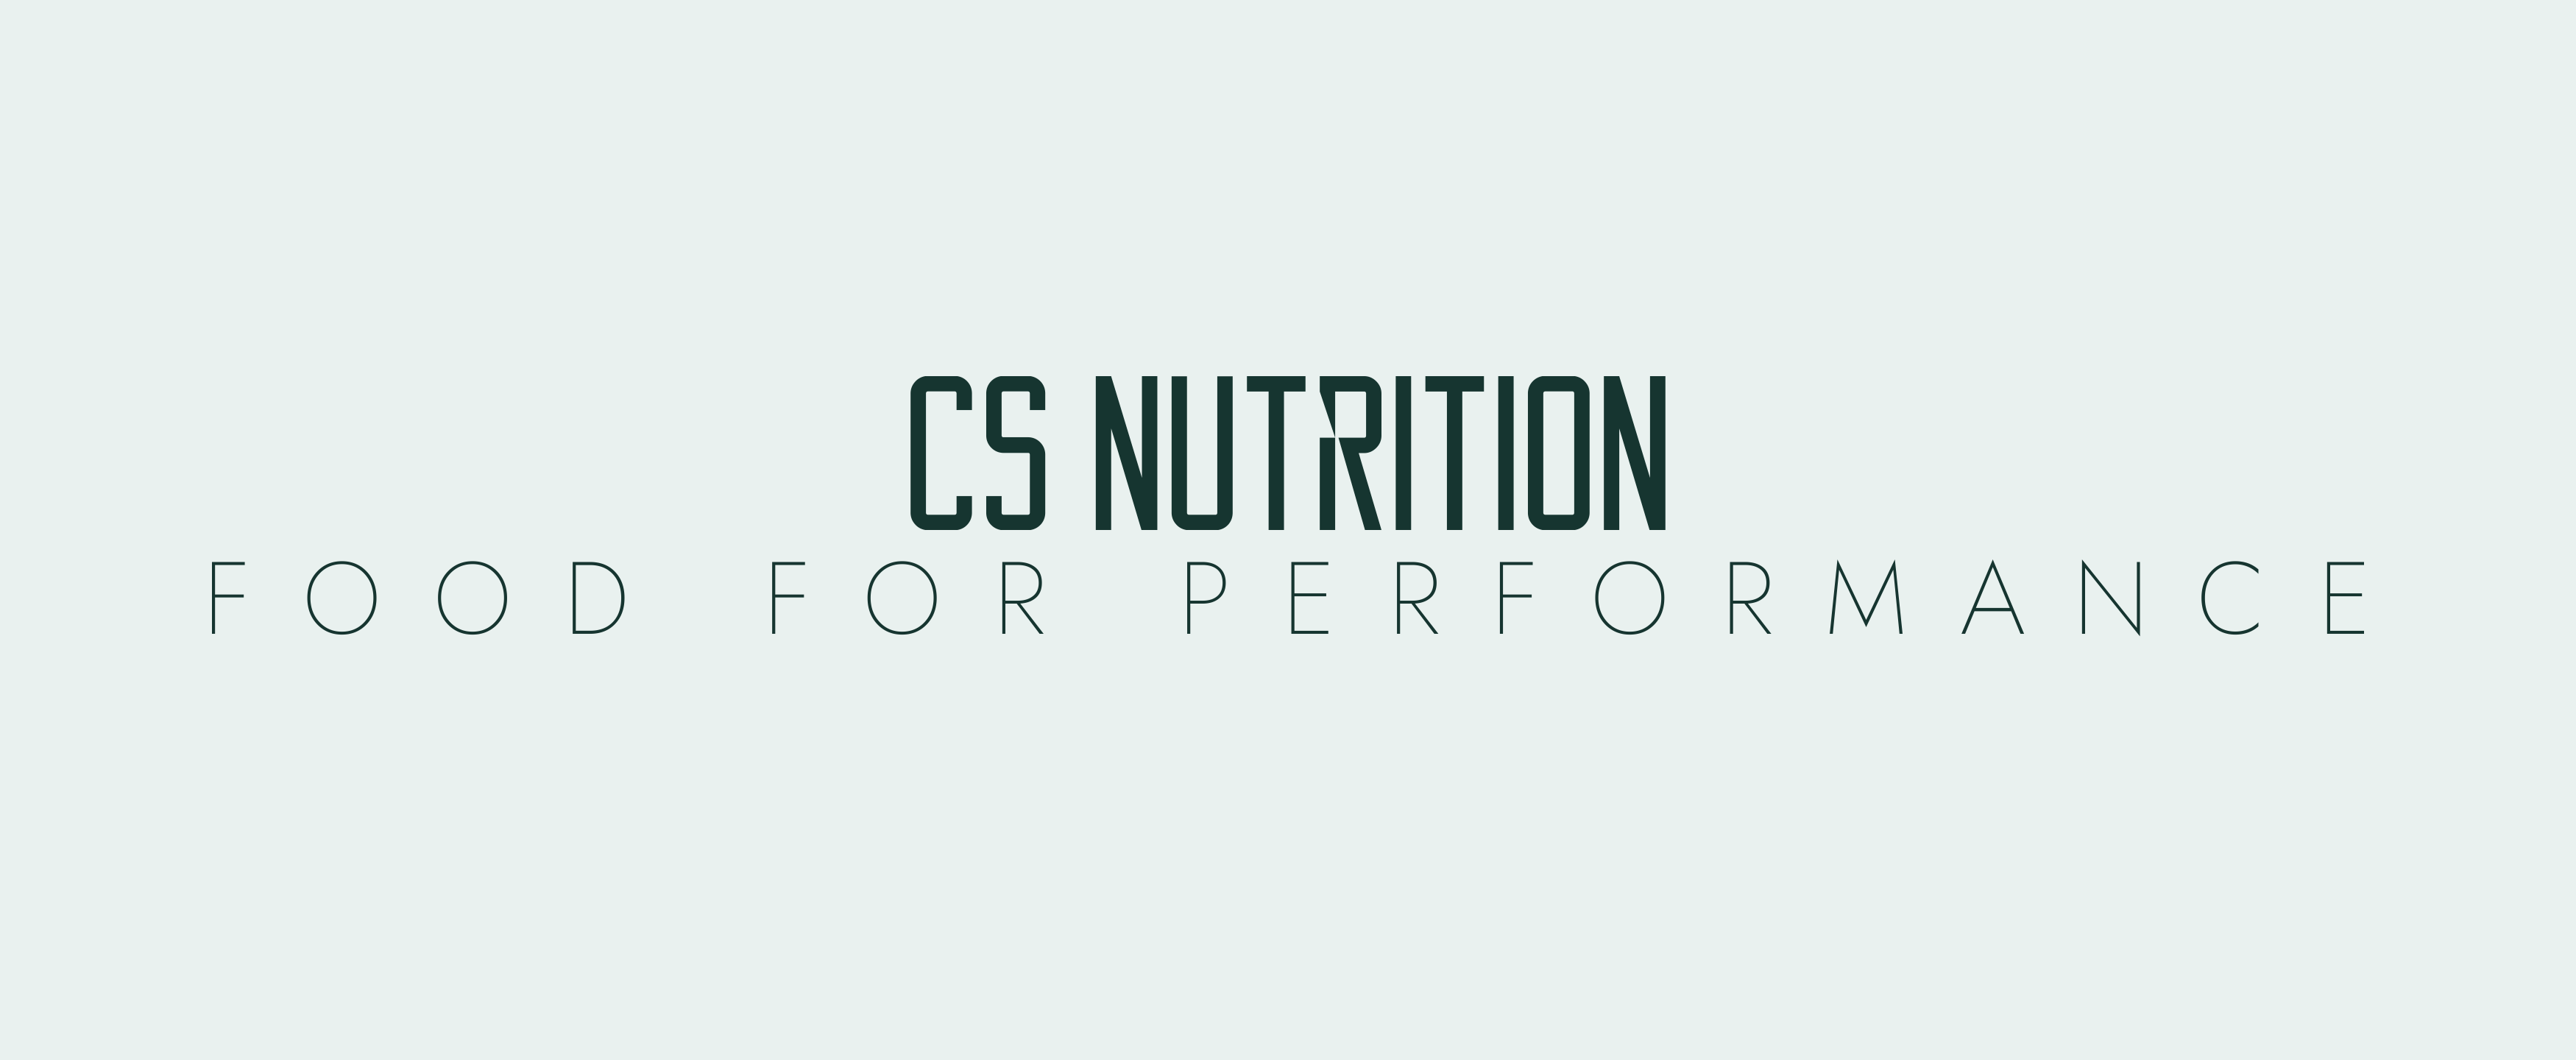 CS Nutrition